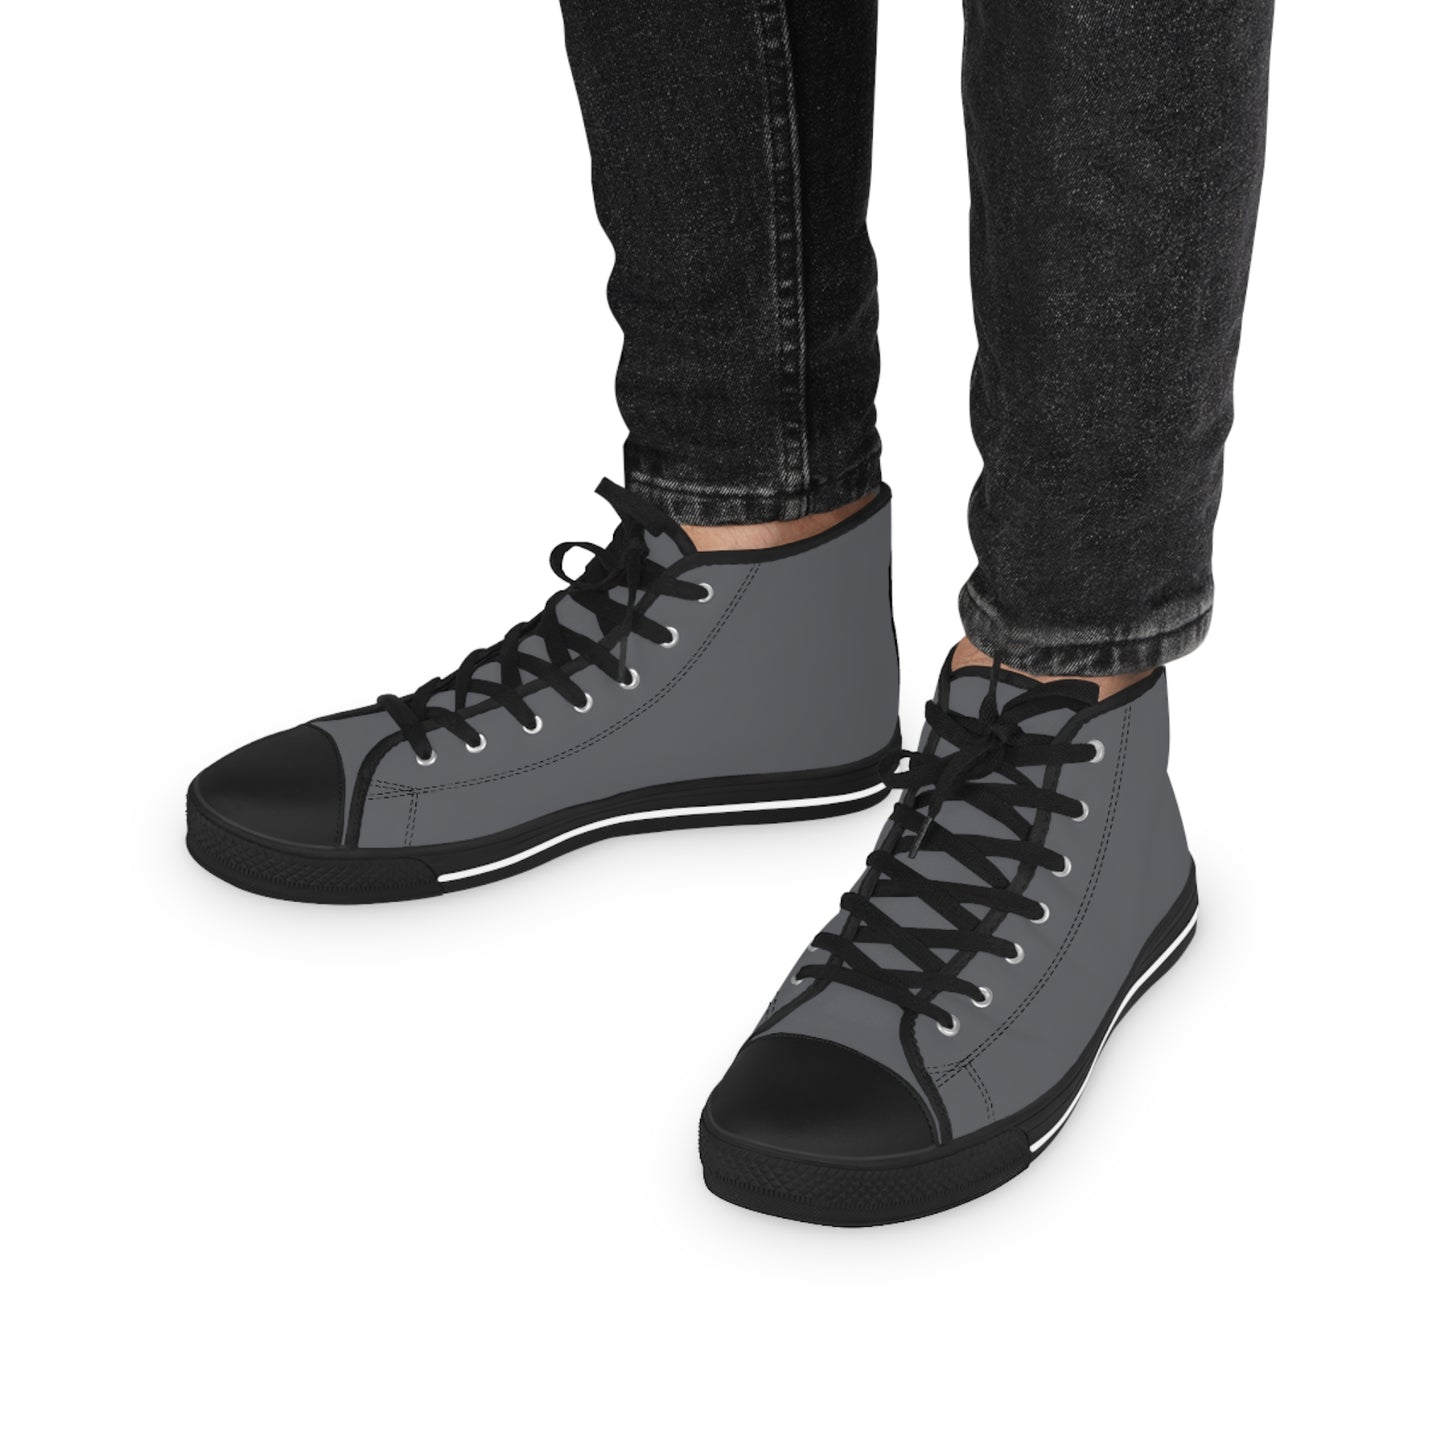 Men's Canvas High Top Solid Color Sneakers - Concrete Blue US 14 White sole